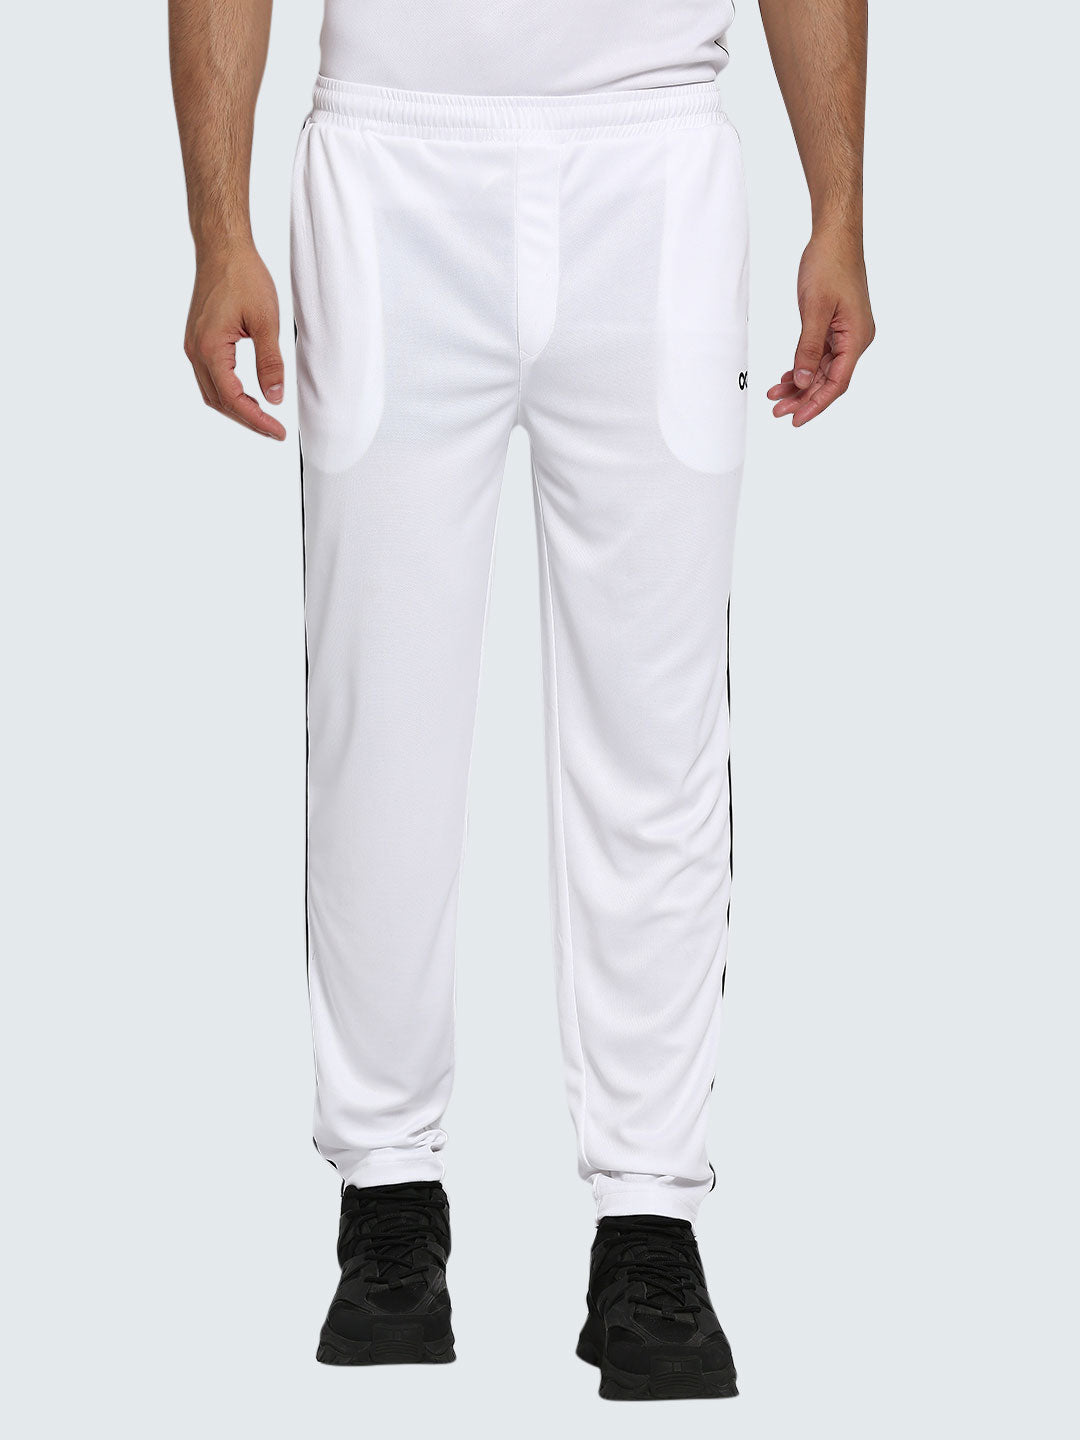 HILFIGER ATHLETICS Vintage White Track Nylon pants Mens size L | eBay